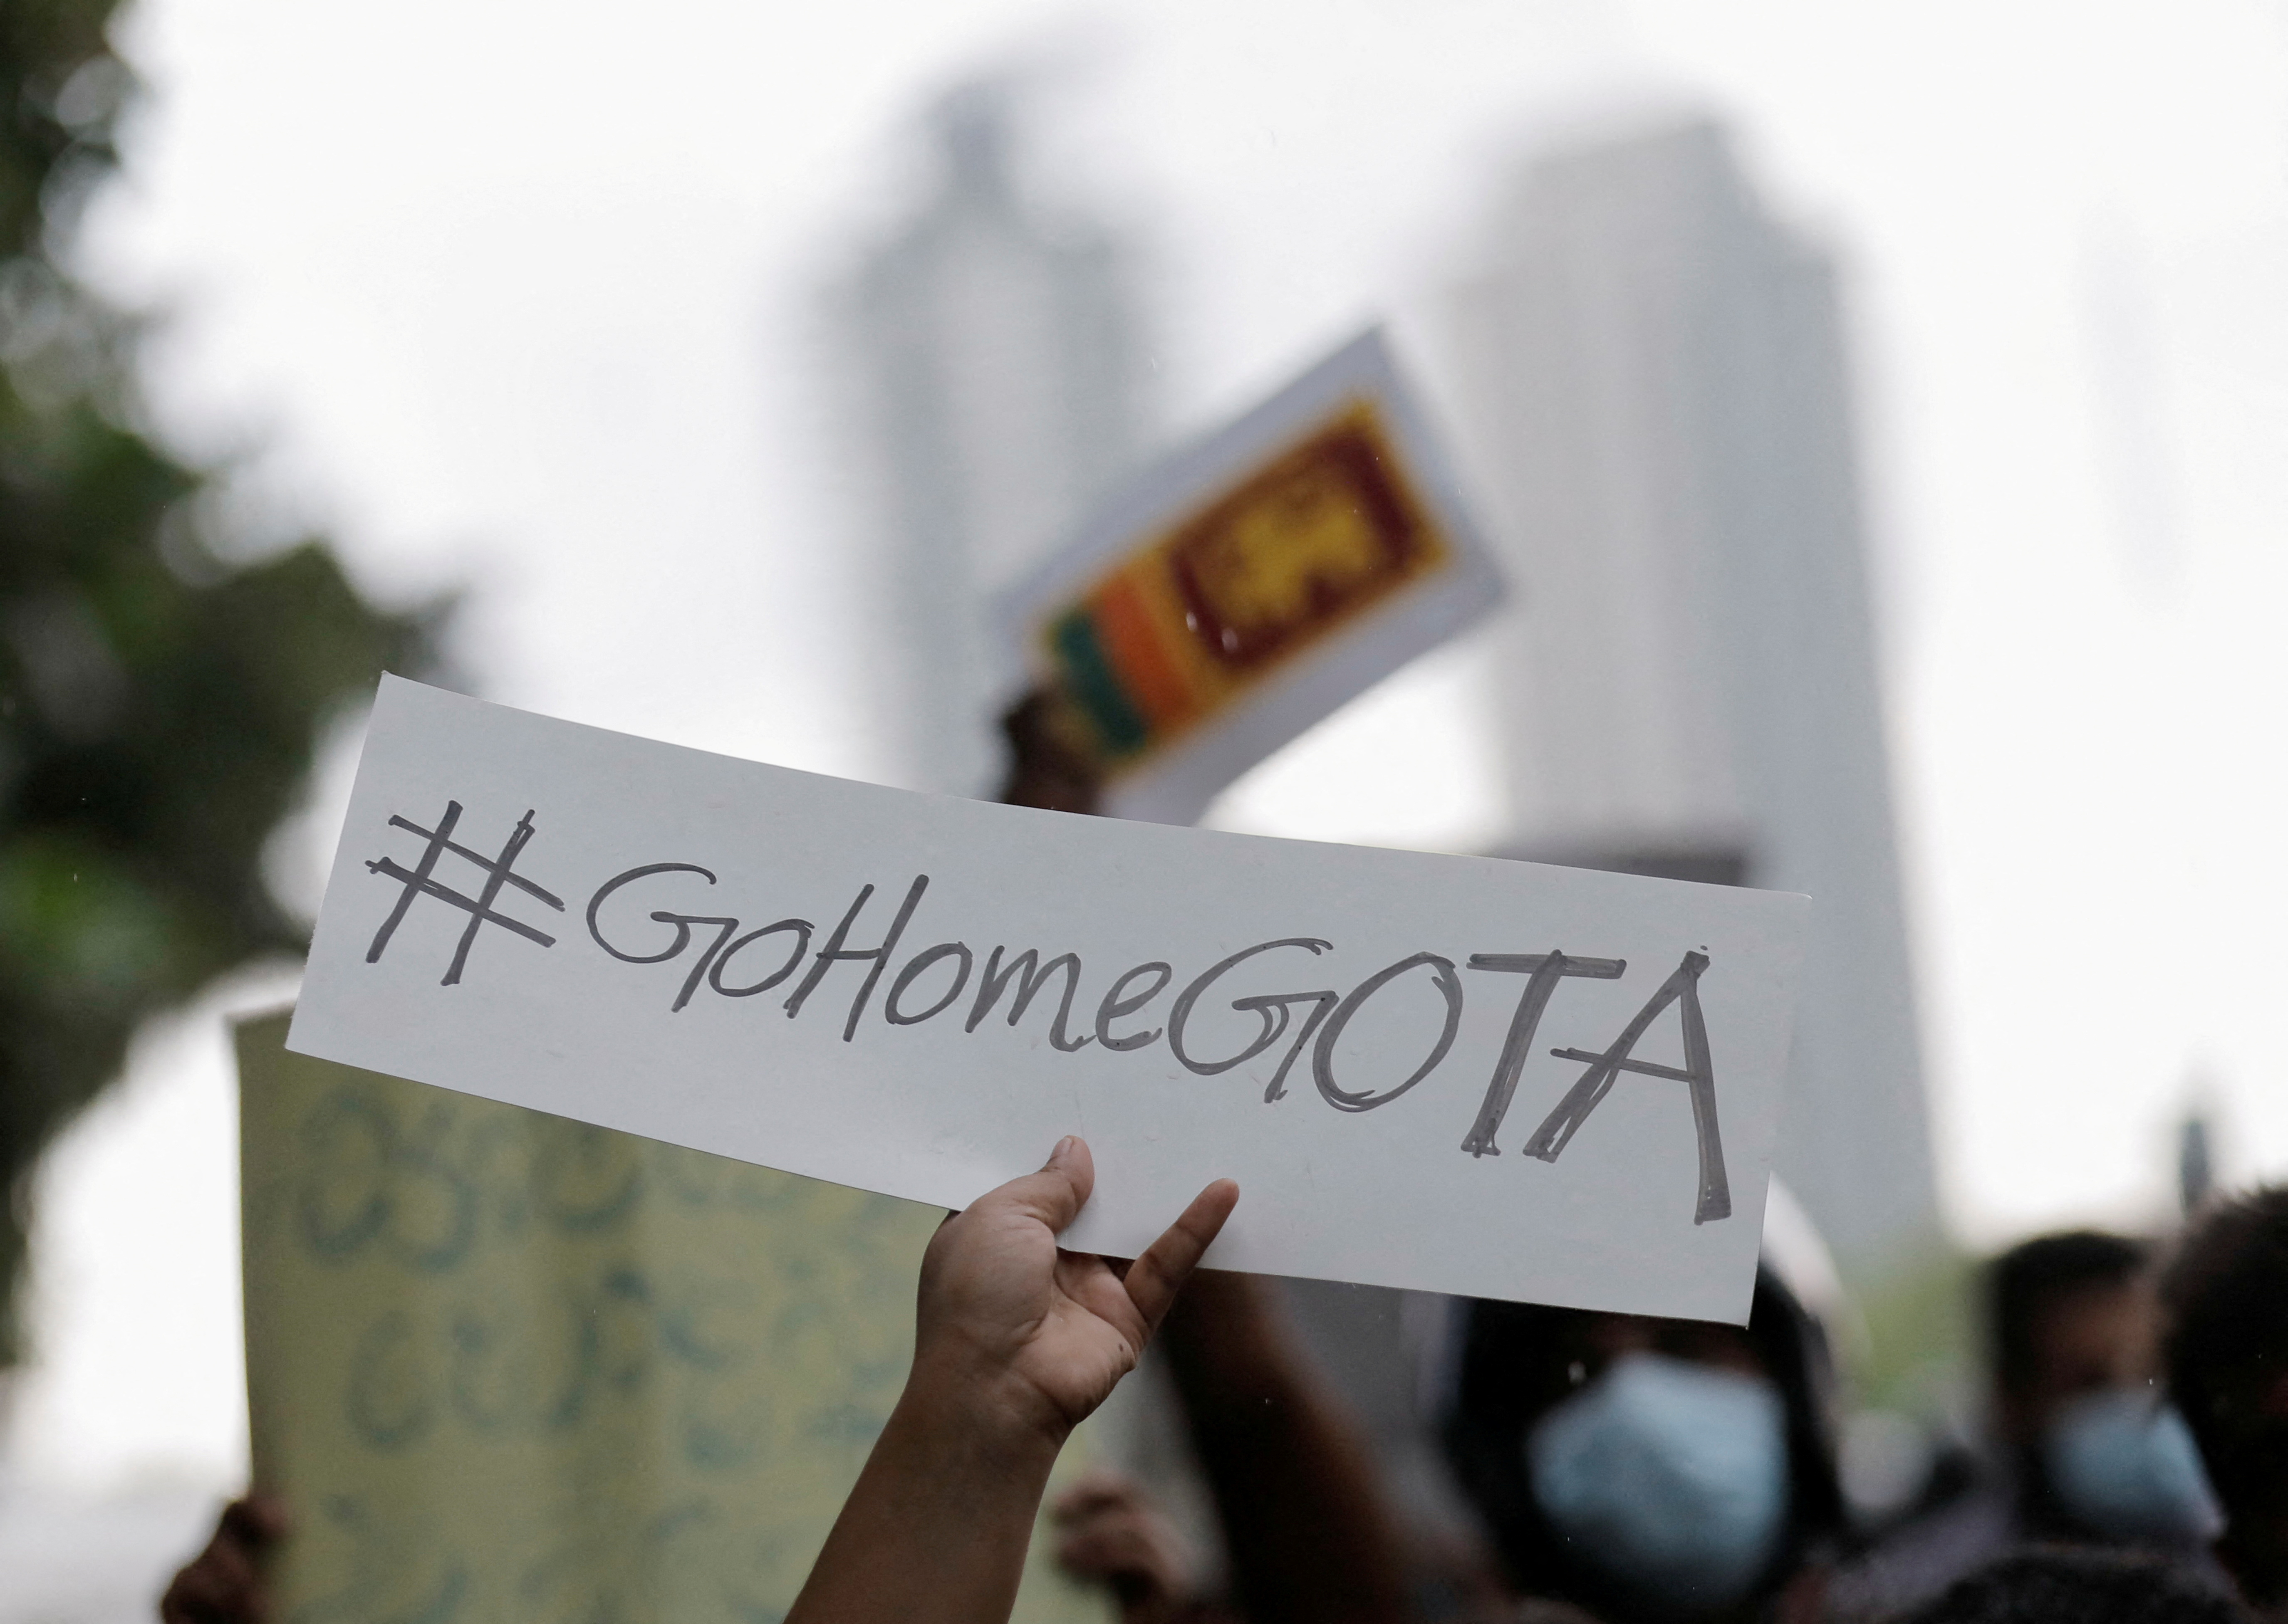 Protest seeking resignation of Sri Lankan President Gotabaya enters 50th day; organisers to intensify agitation